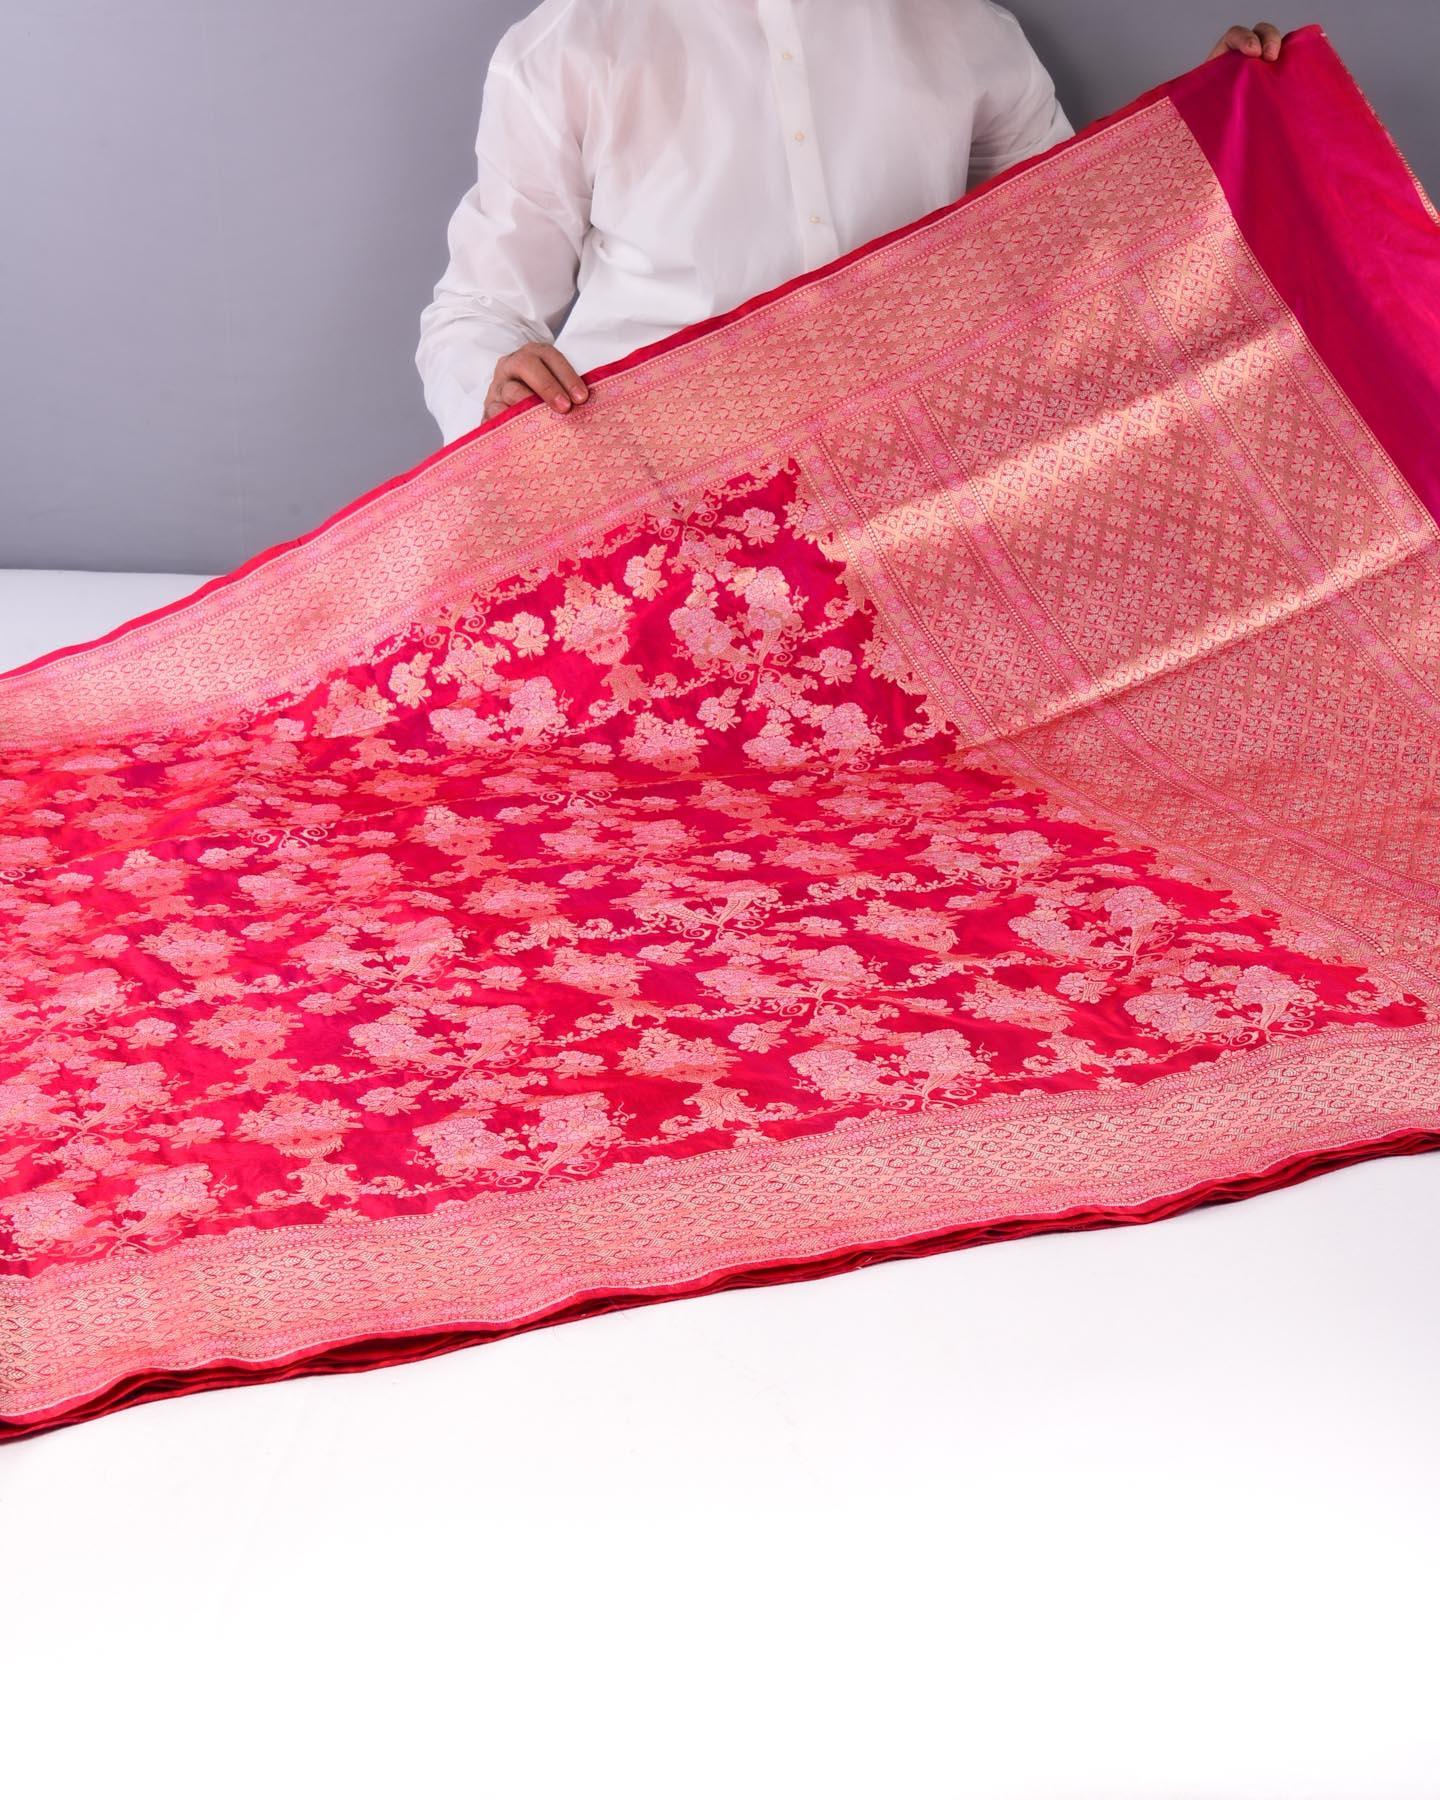 Shot Rani Pink Banarasi Alfi Sona Rupa Cutwork Brocade Handwoven Katan Silk Saree - By HolyWeaves, Benares